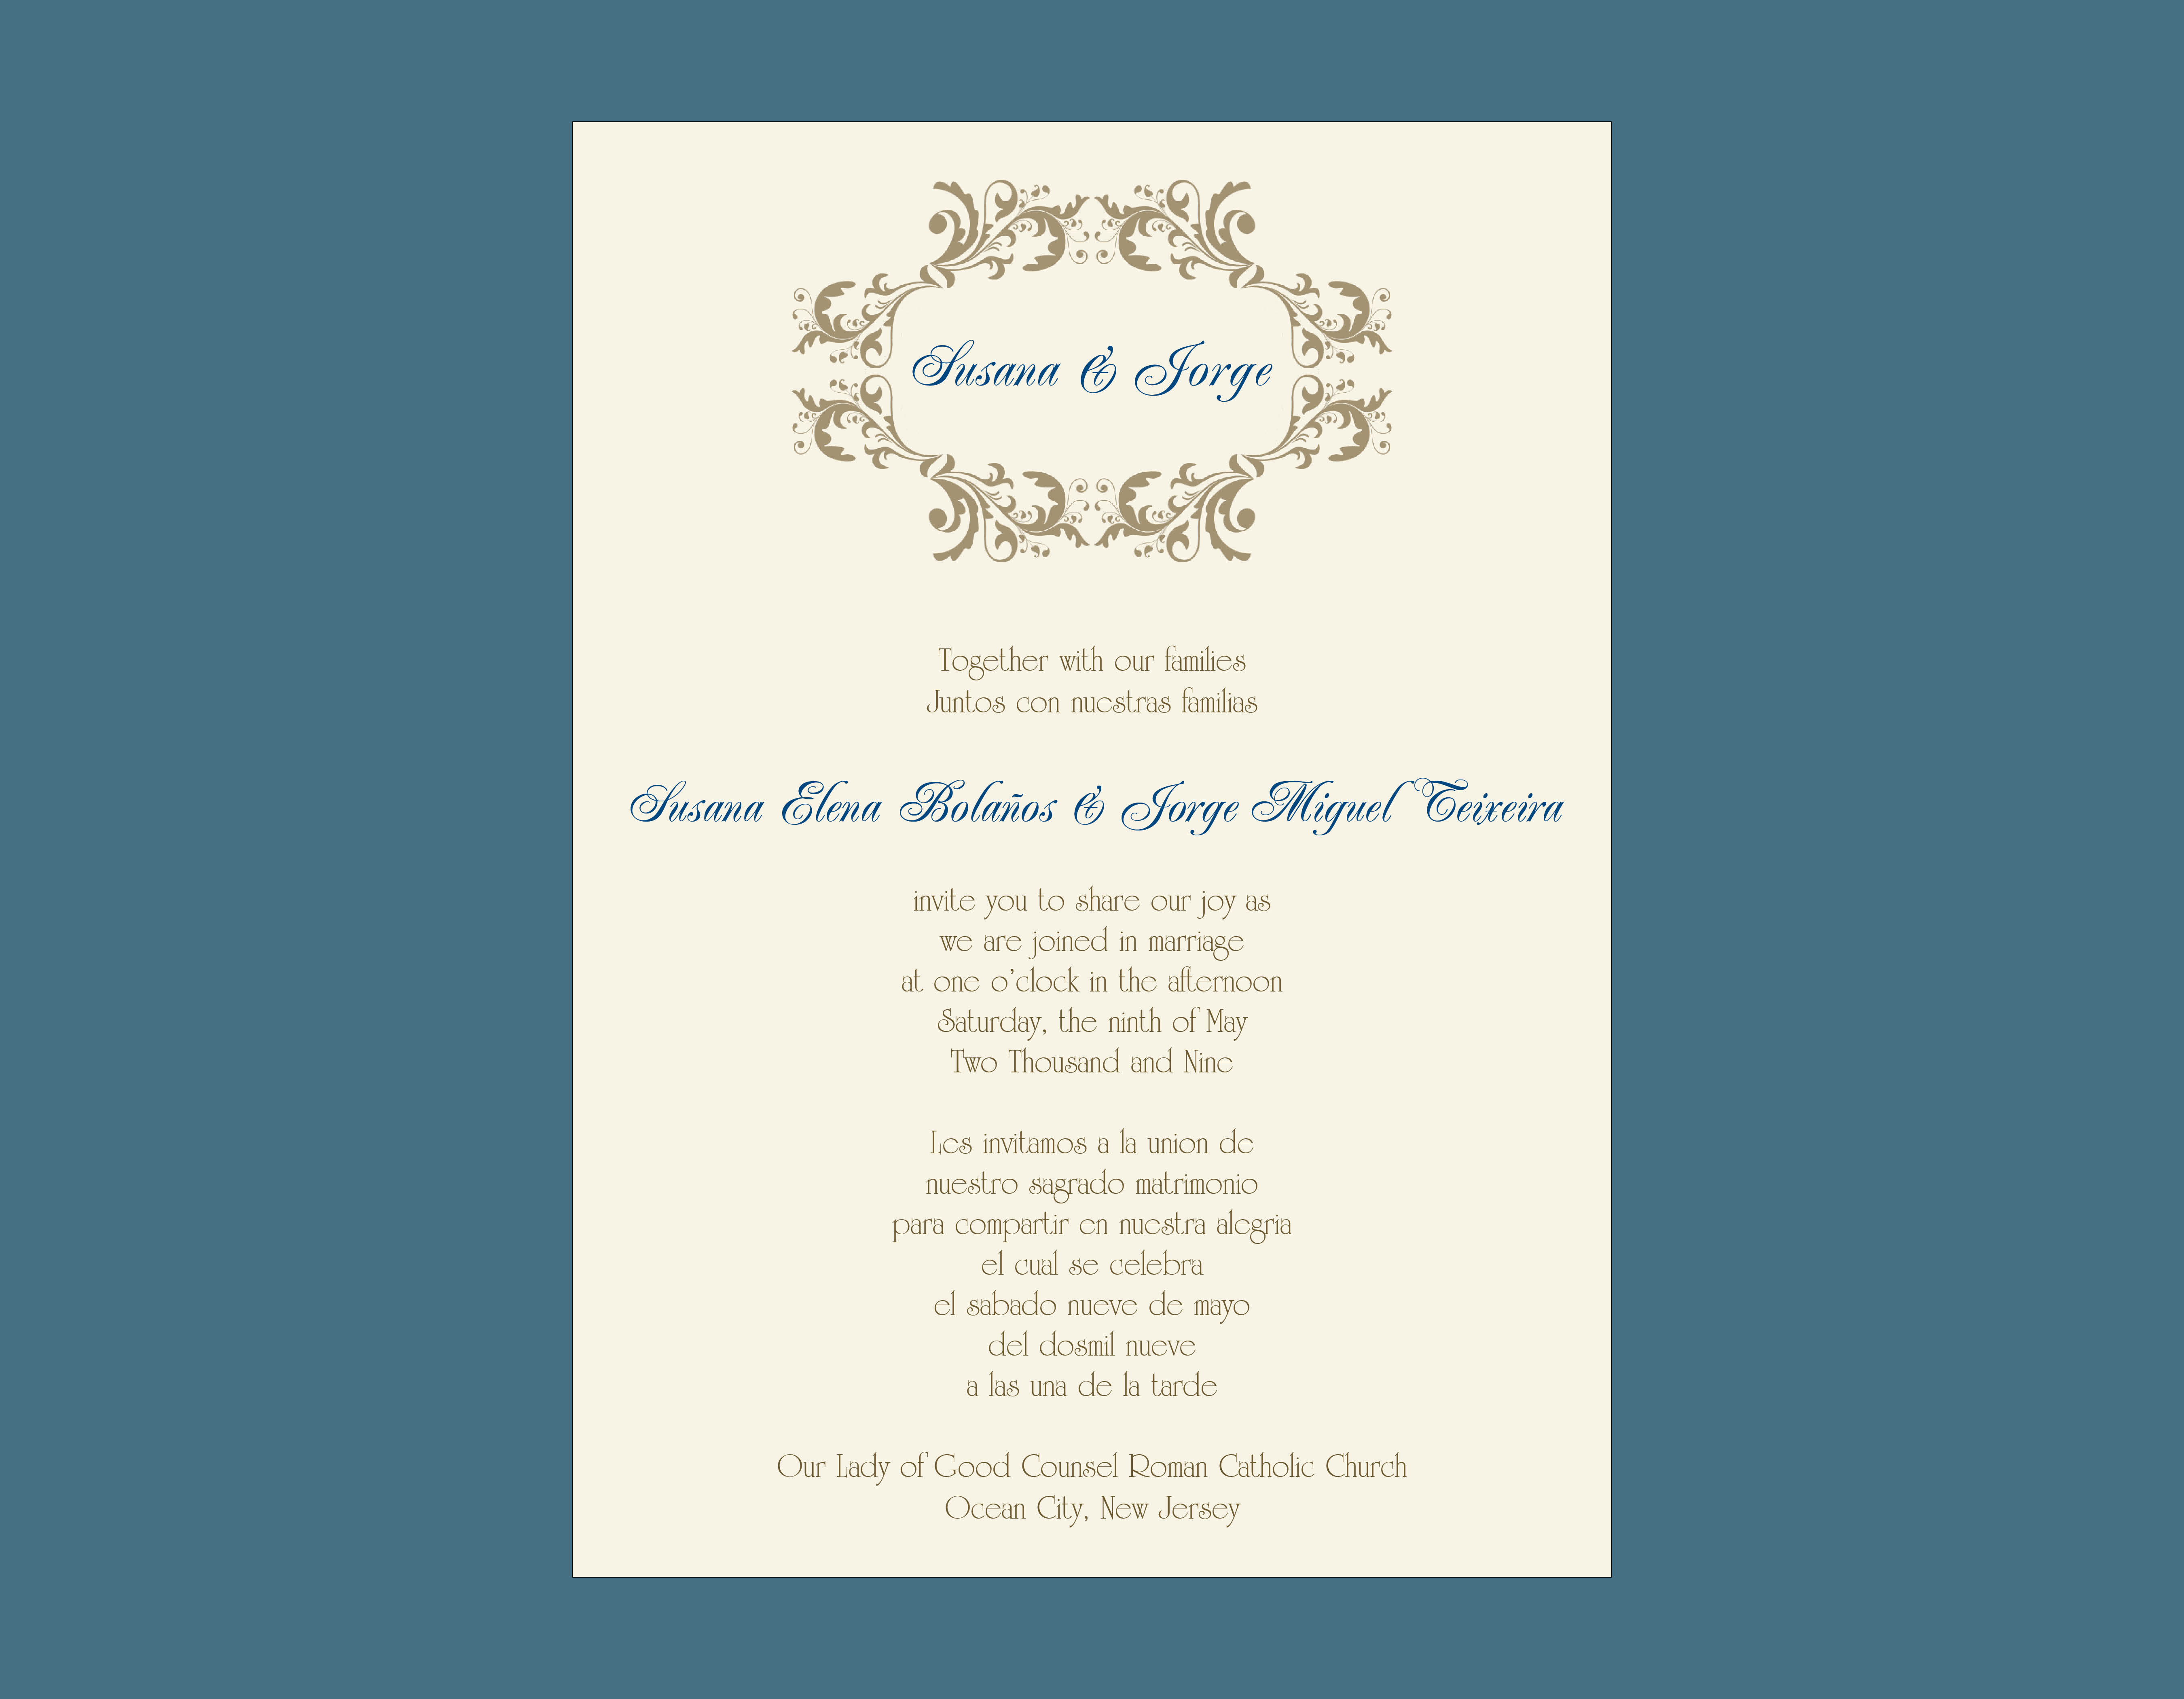 AGW Graphic Design - Teixeira Wedding Invitation